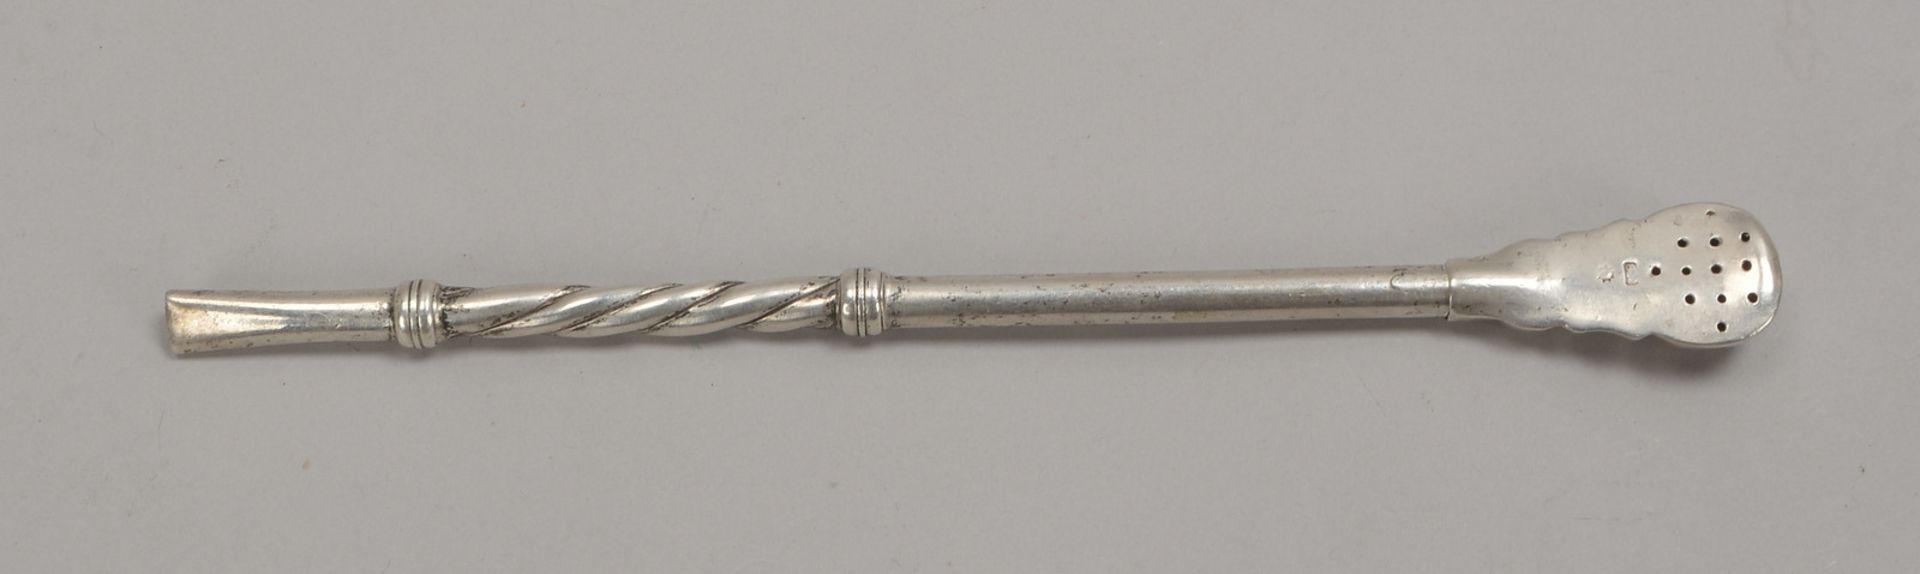 Trinkhalm f&uuml;r Mate-Tee, 800 Silber; L&auml;nge 21 cm, Gewicht 38 g